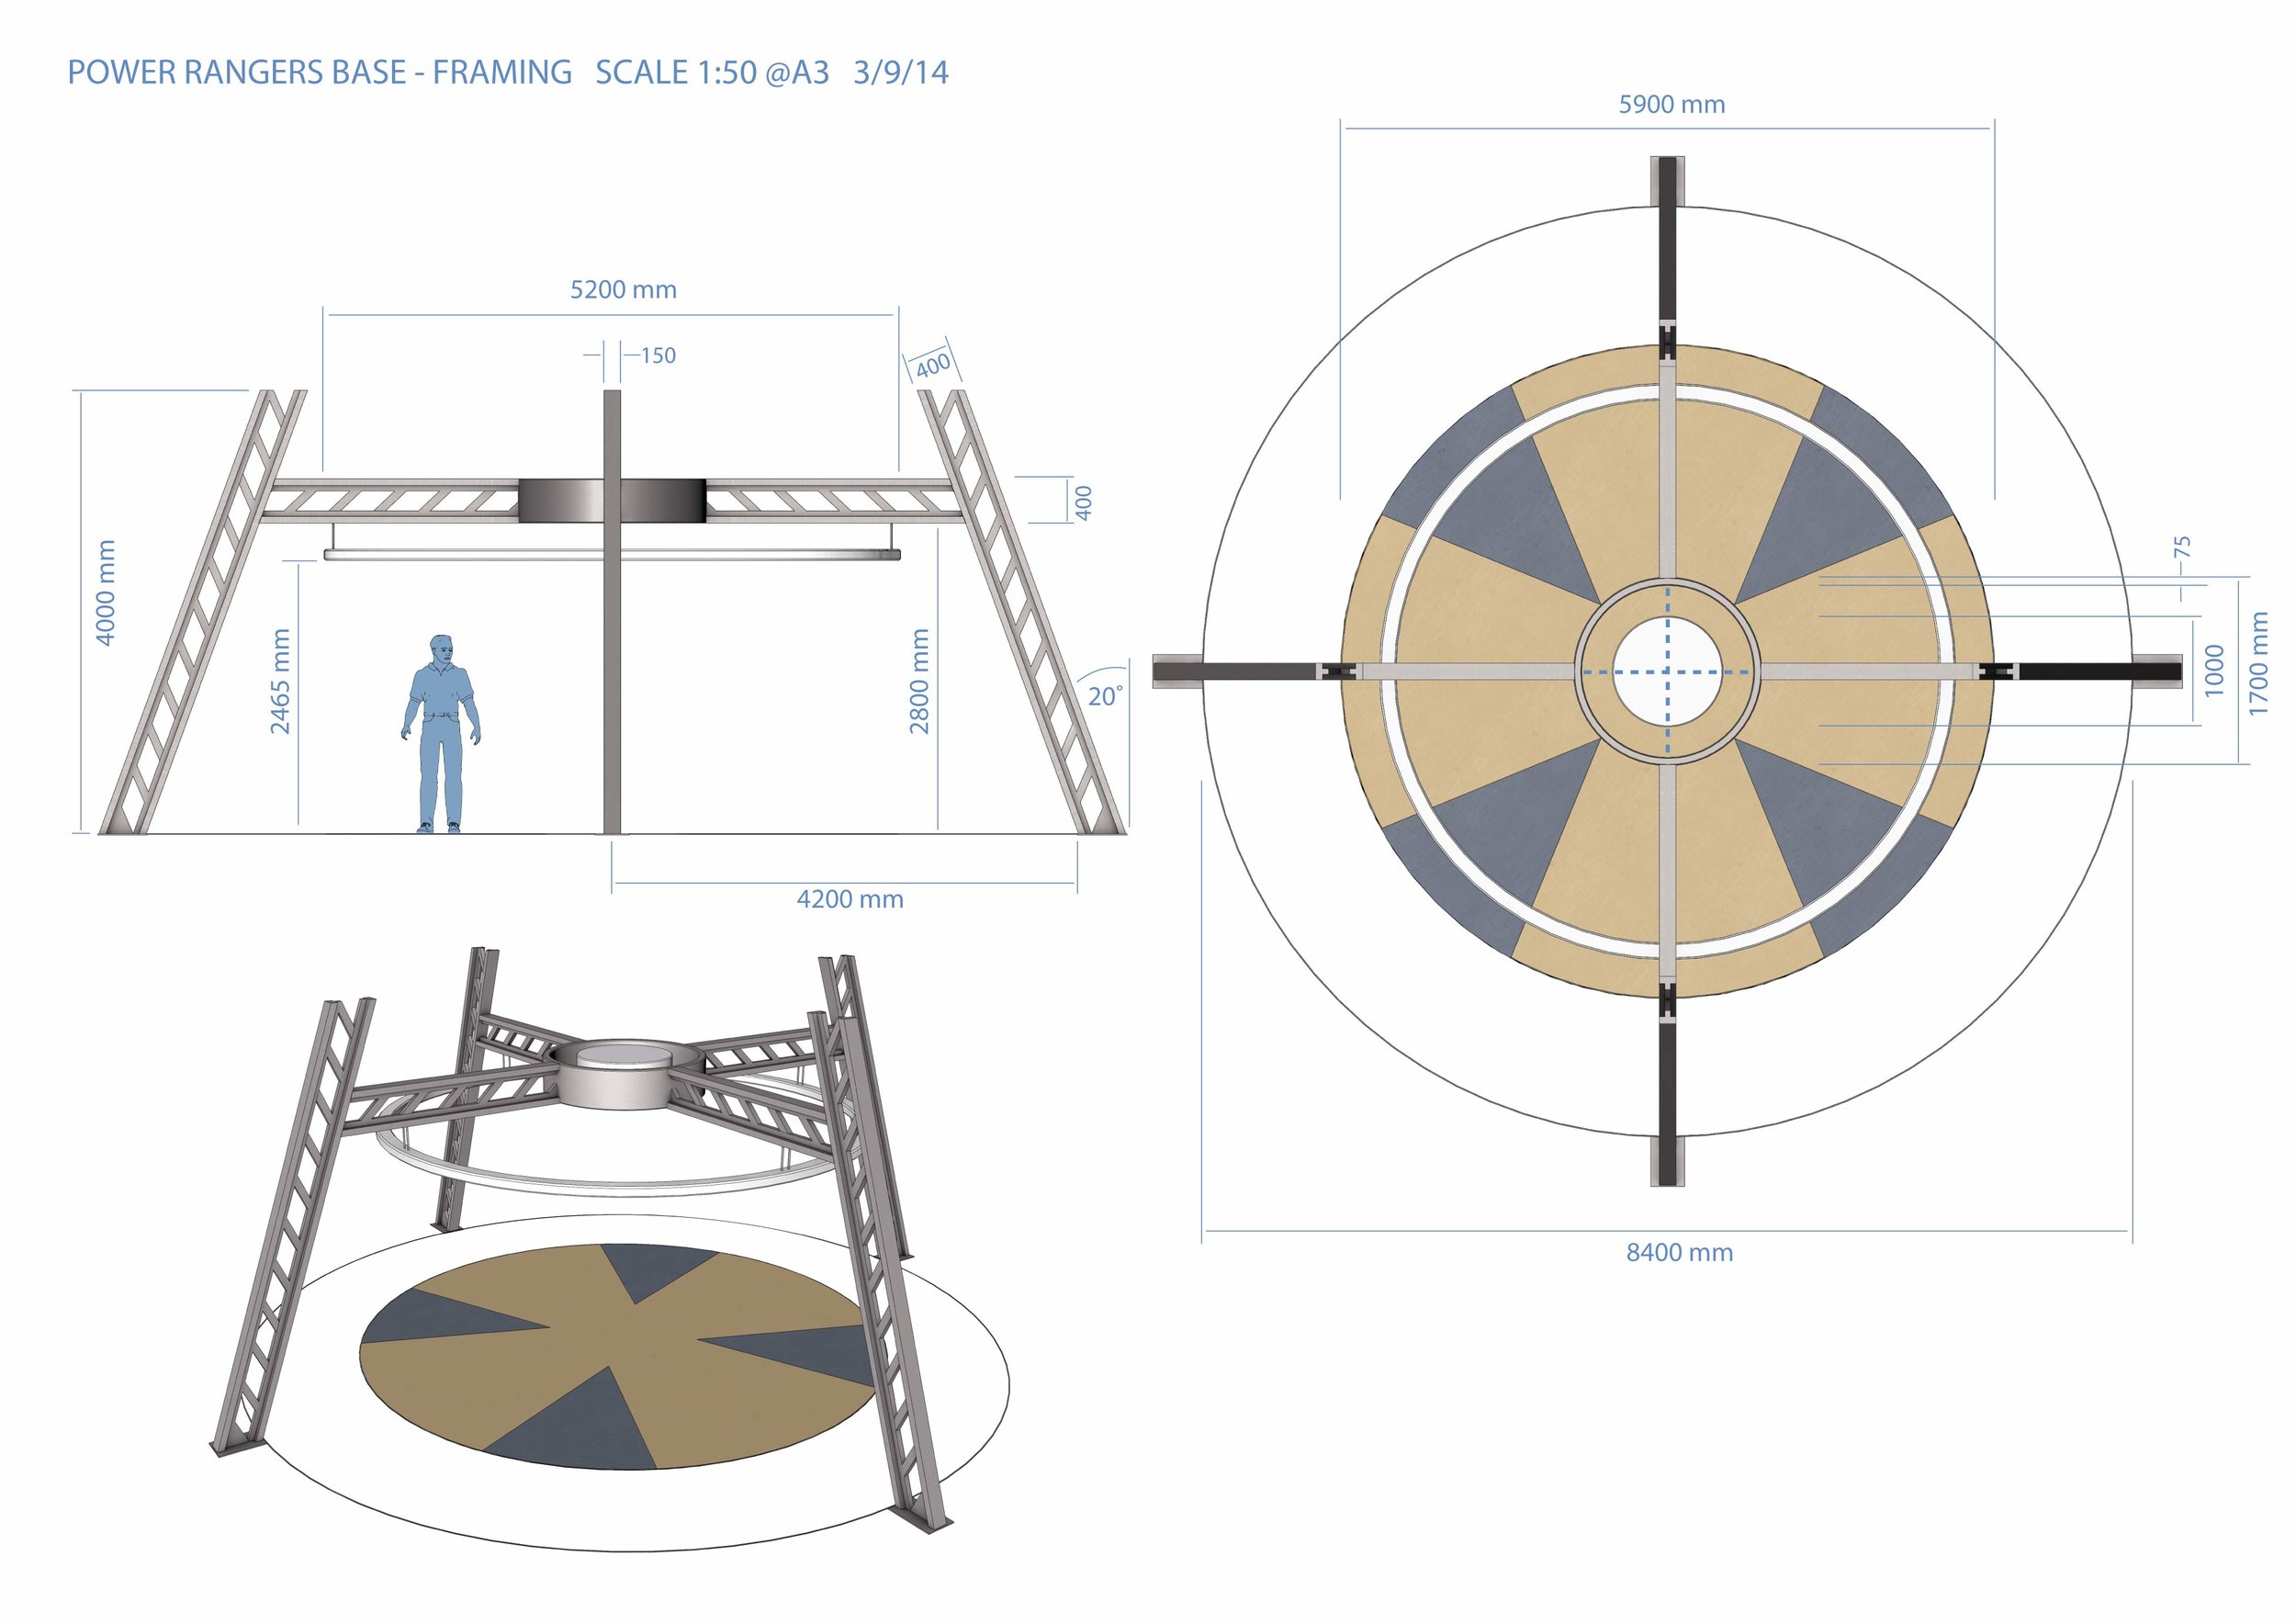  Power Ranger Base design detail drawings 